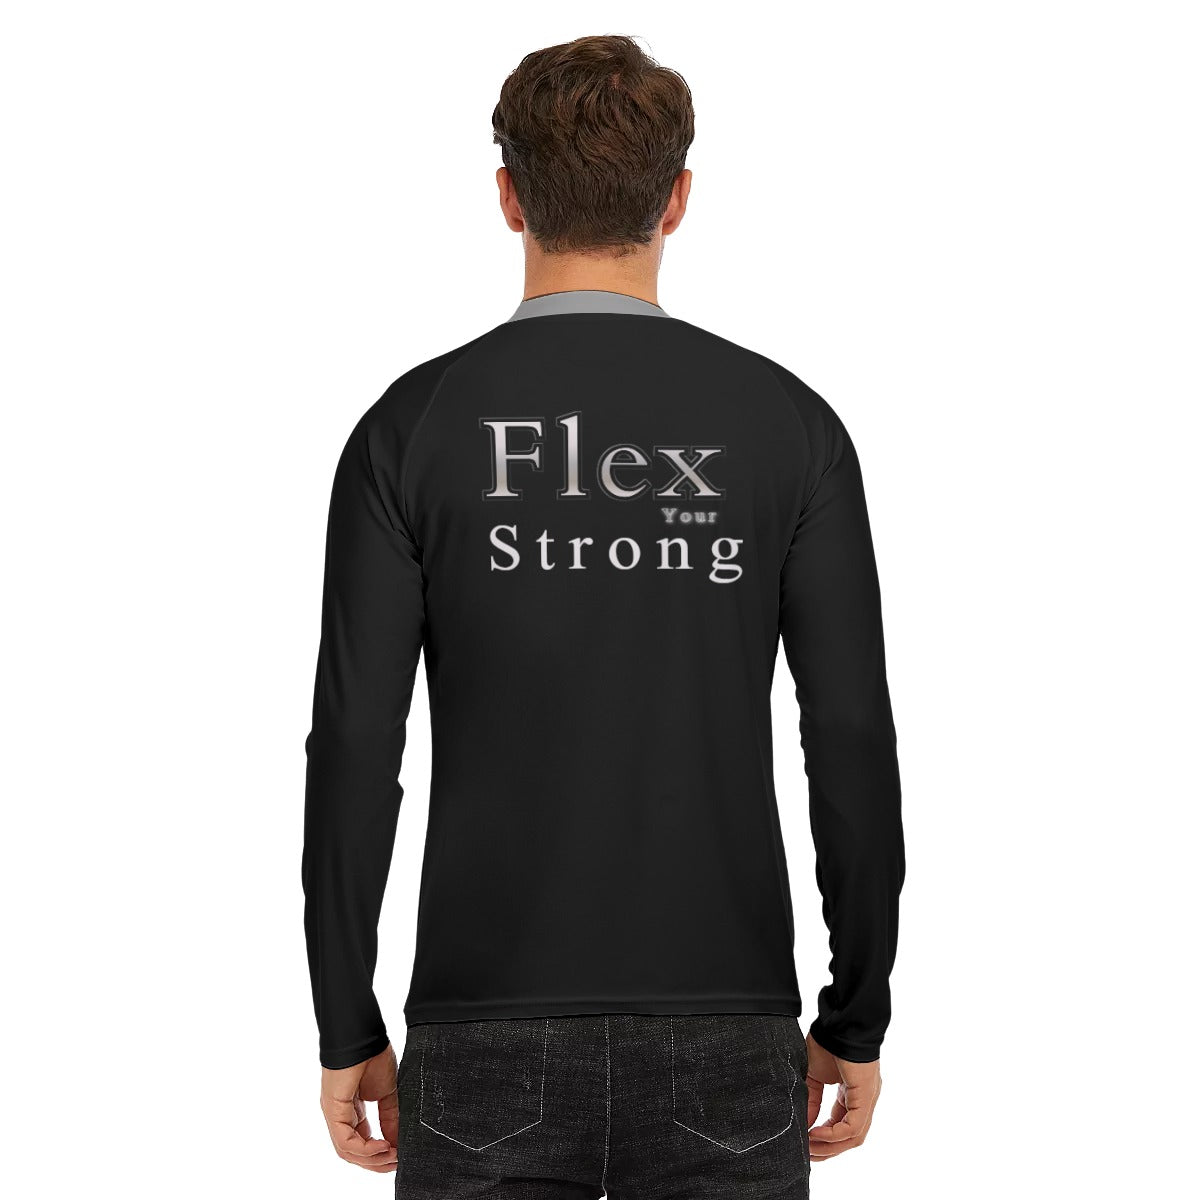 Flex Strong - Men's Rash Shirt